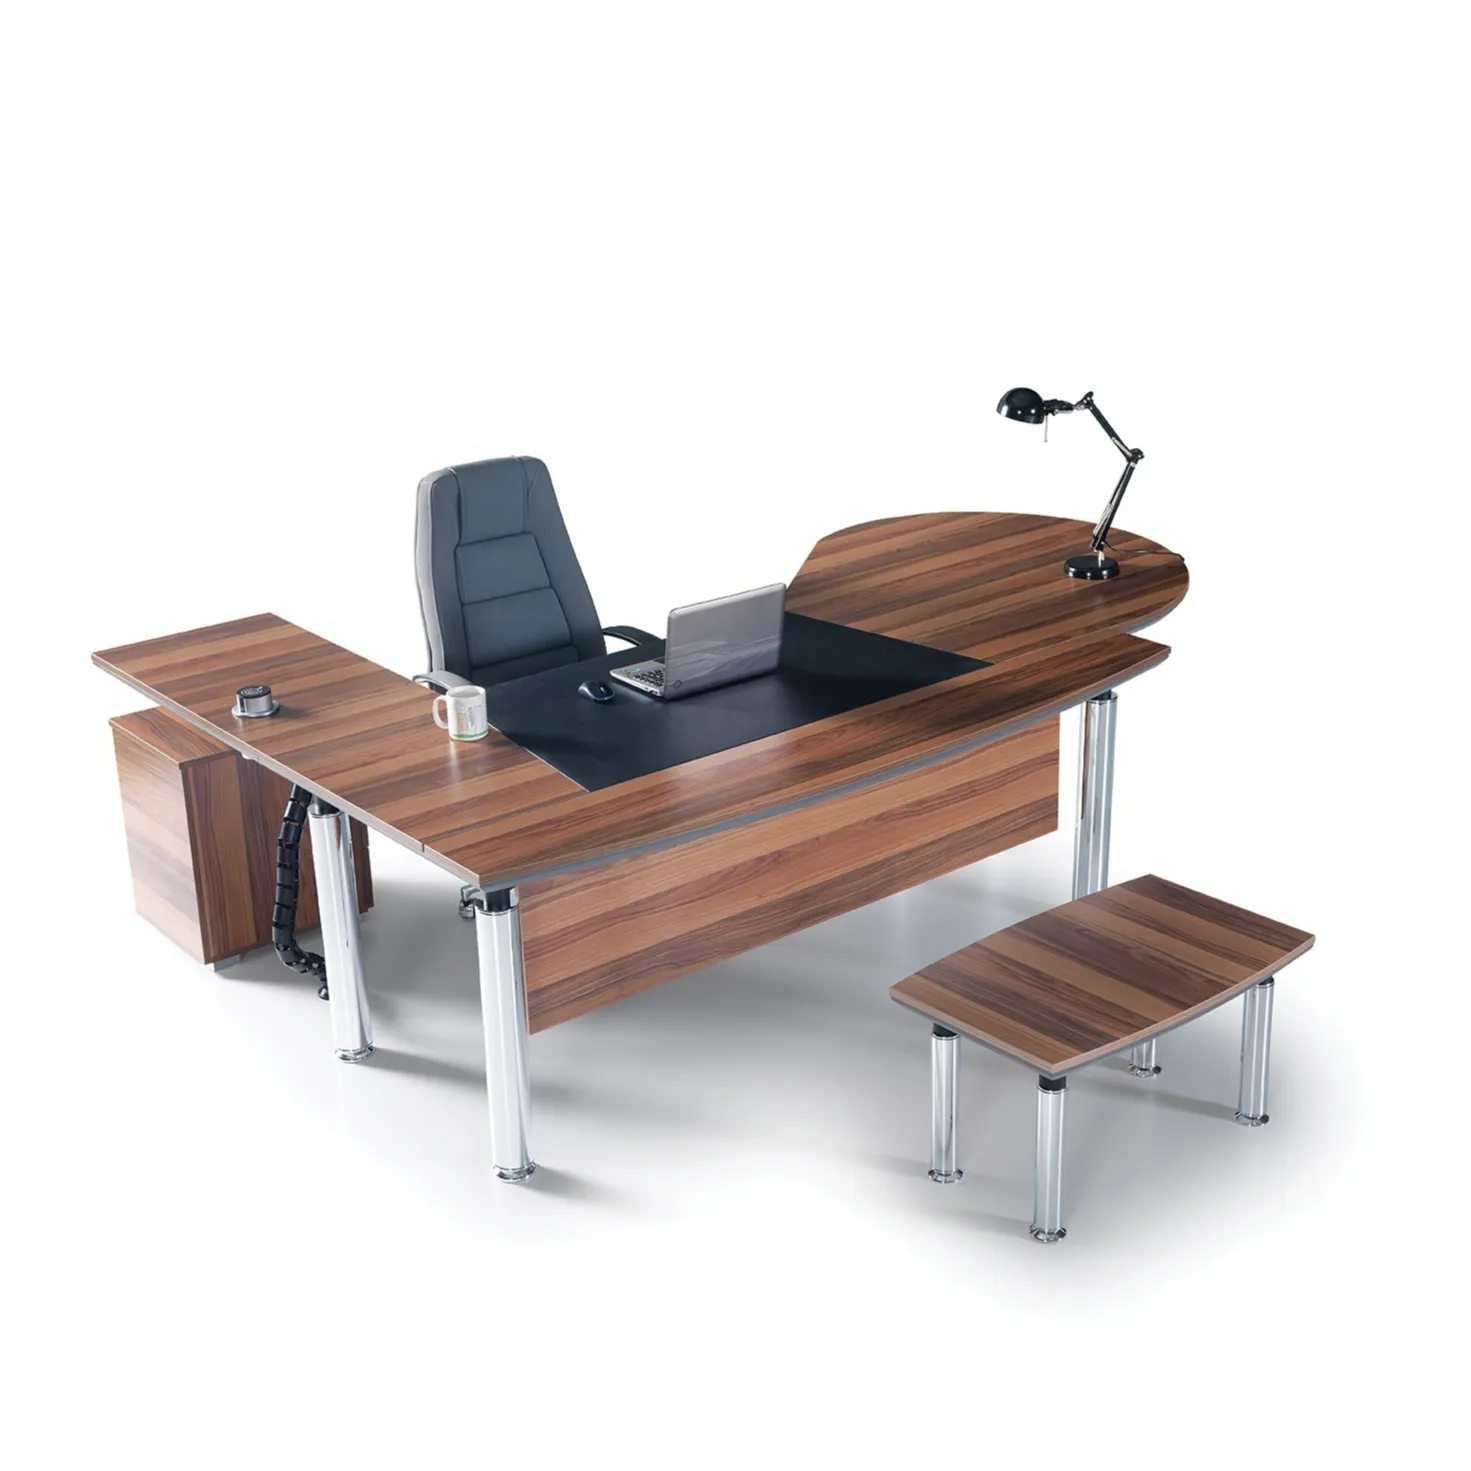 Modern Design PVC Edge Banded Mdflam Table SANTOS Executive Office Furniture Manager Desk + Coffee Table E1 Grade Melamine Board